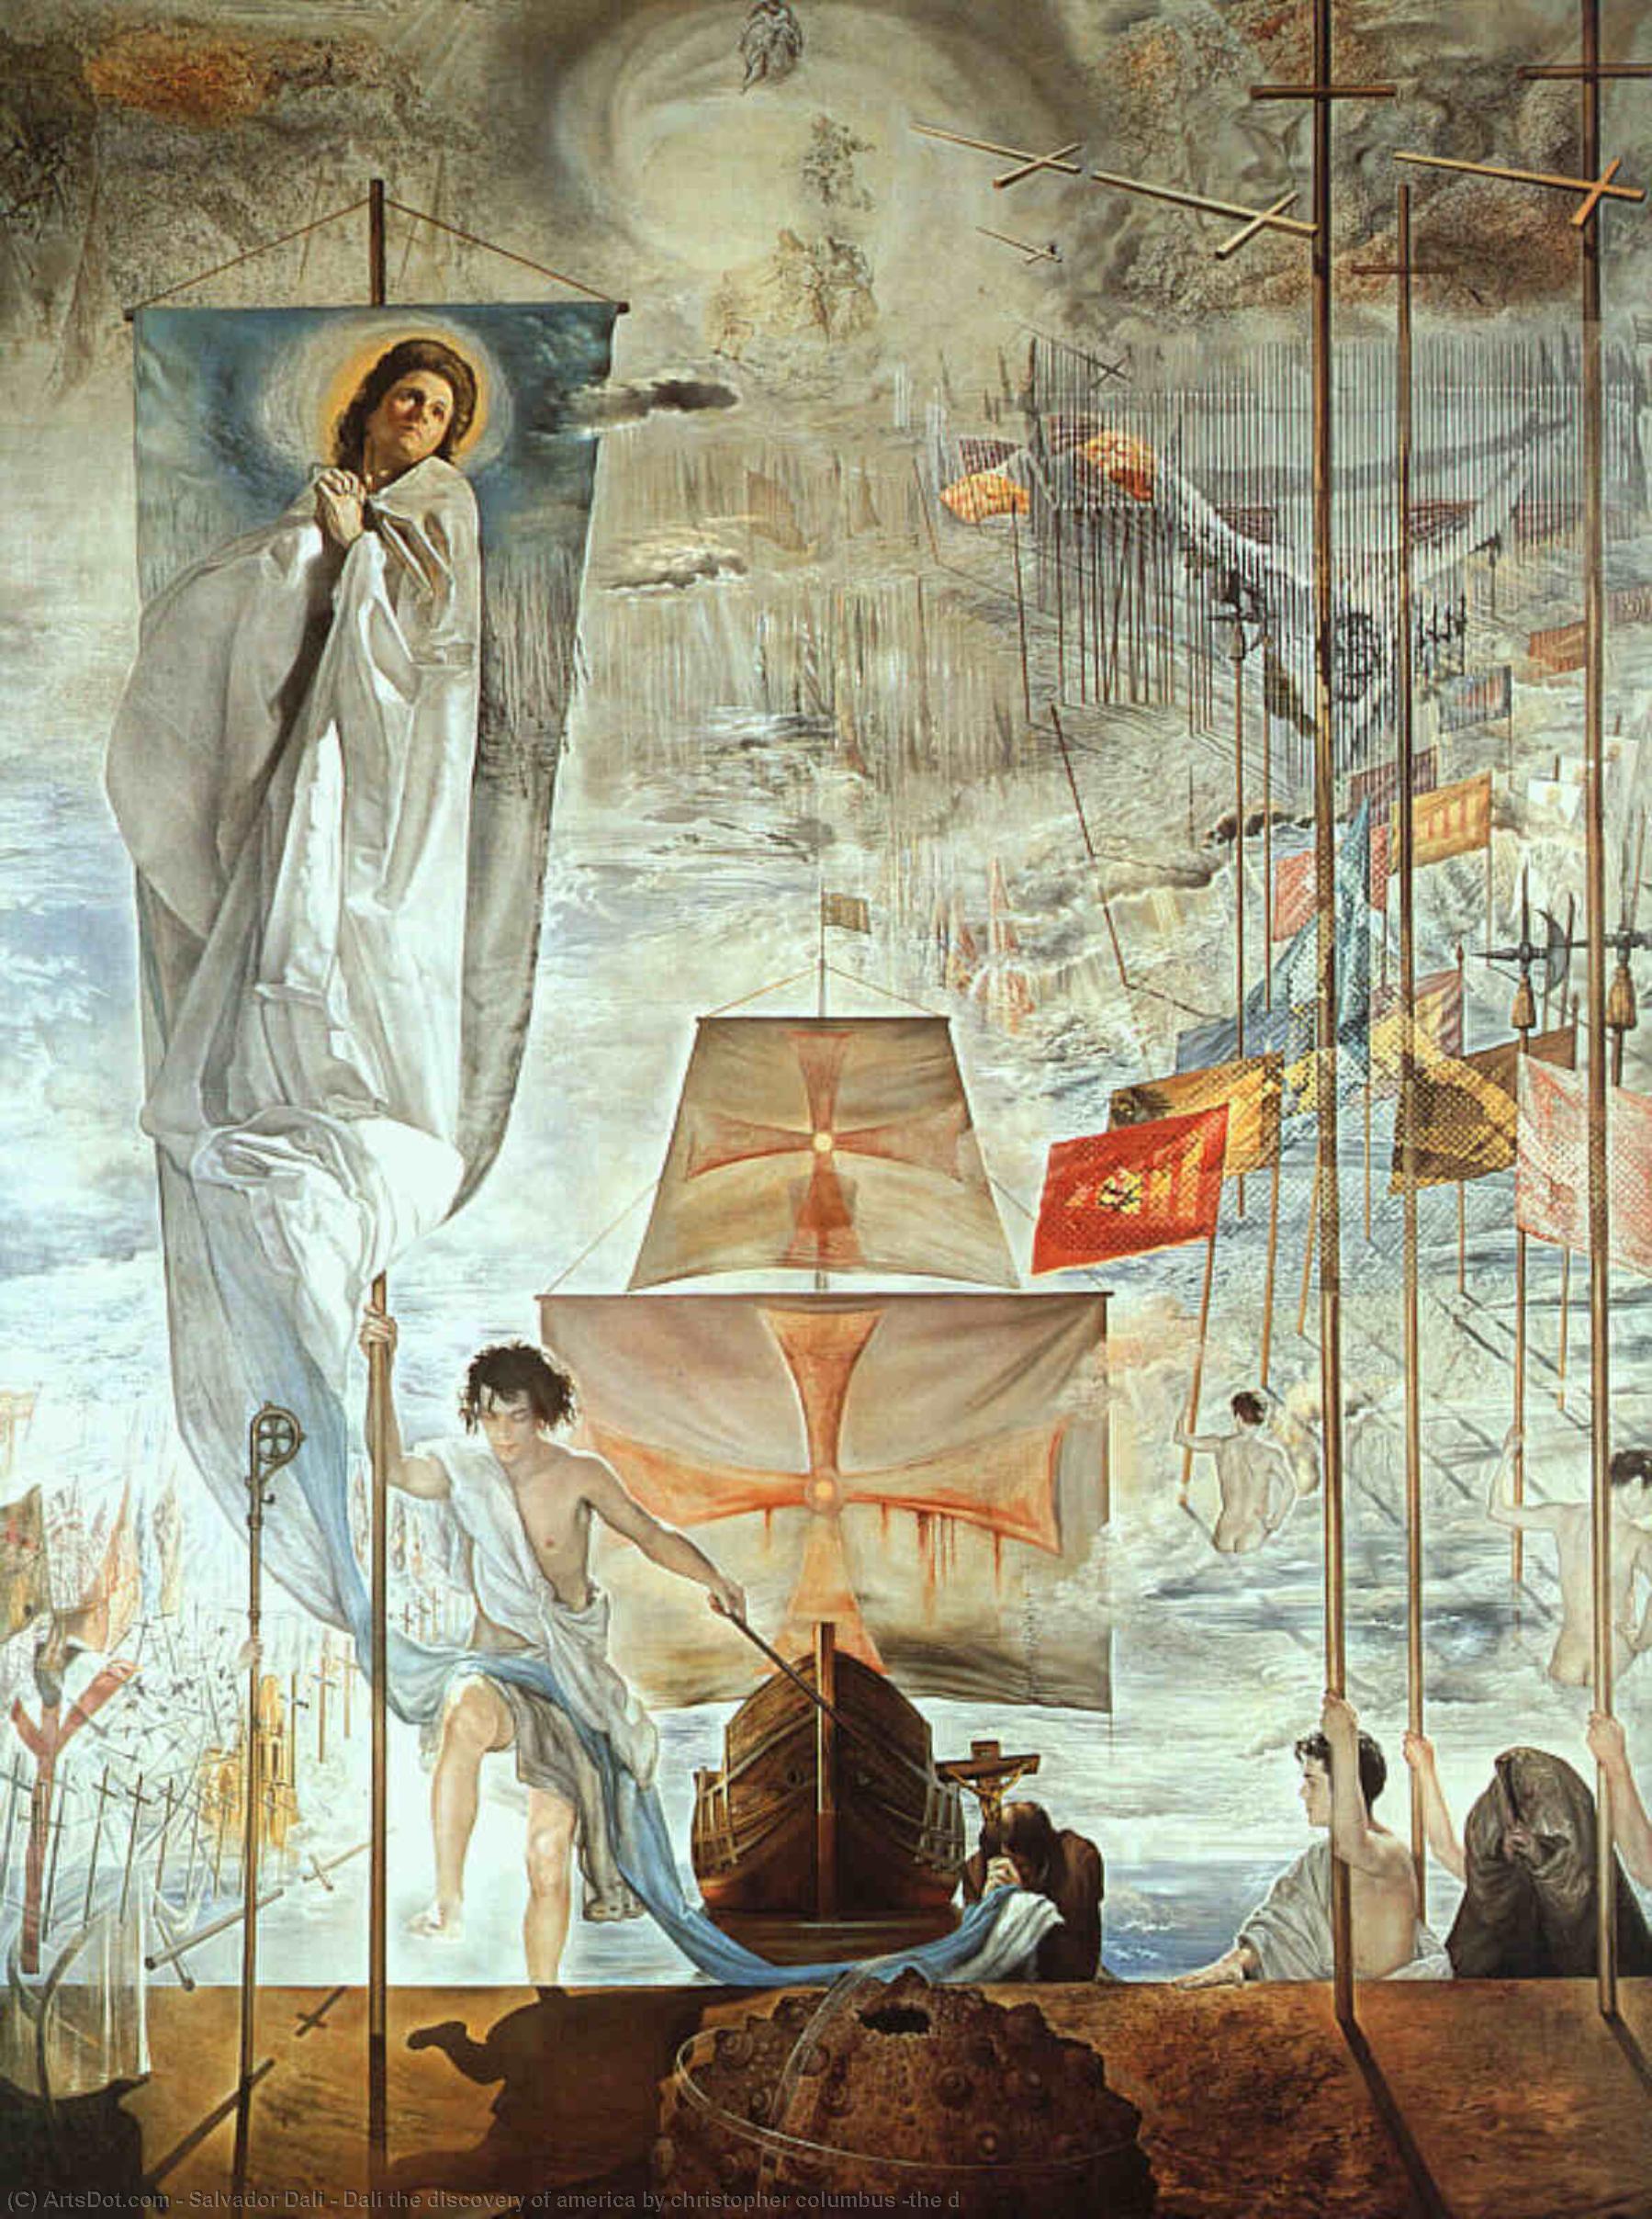 WikiOO.org - Enciklopedija likovnih umjetnosti - Slikarstvo, umjetnička djela Salvador Dali - Dalí the discovery of america by christopher columbus (the d